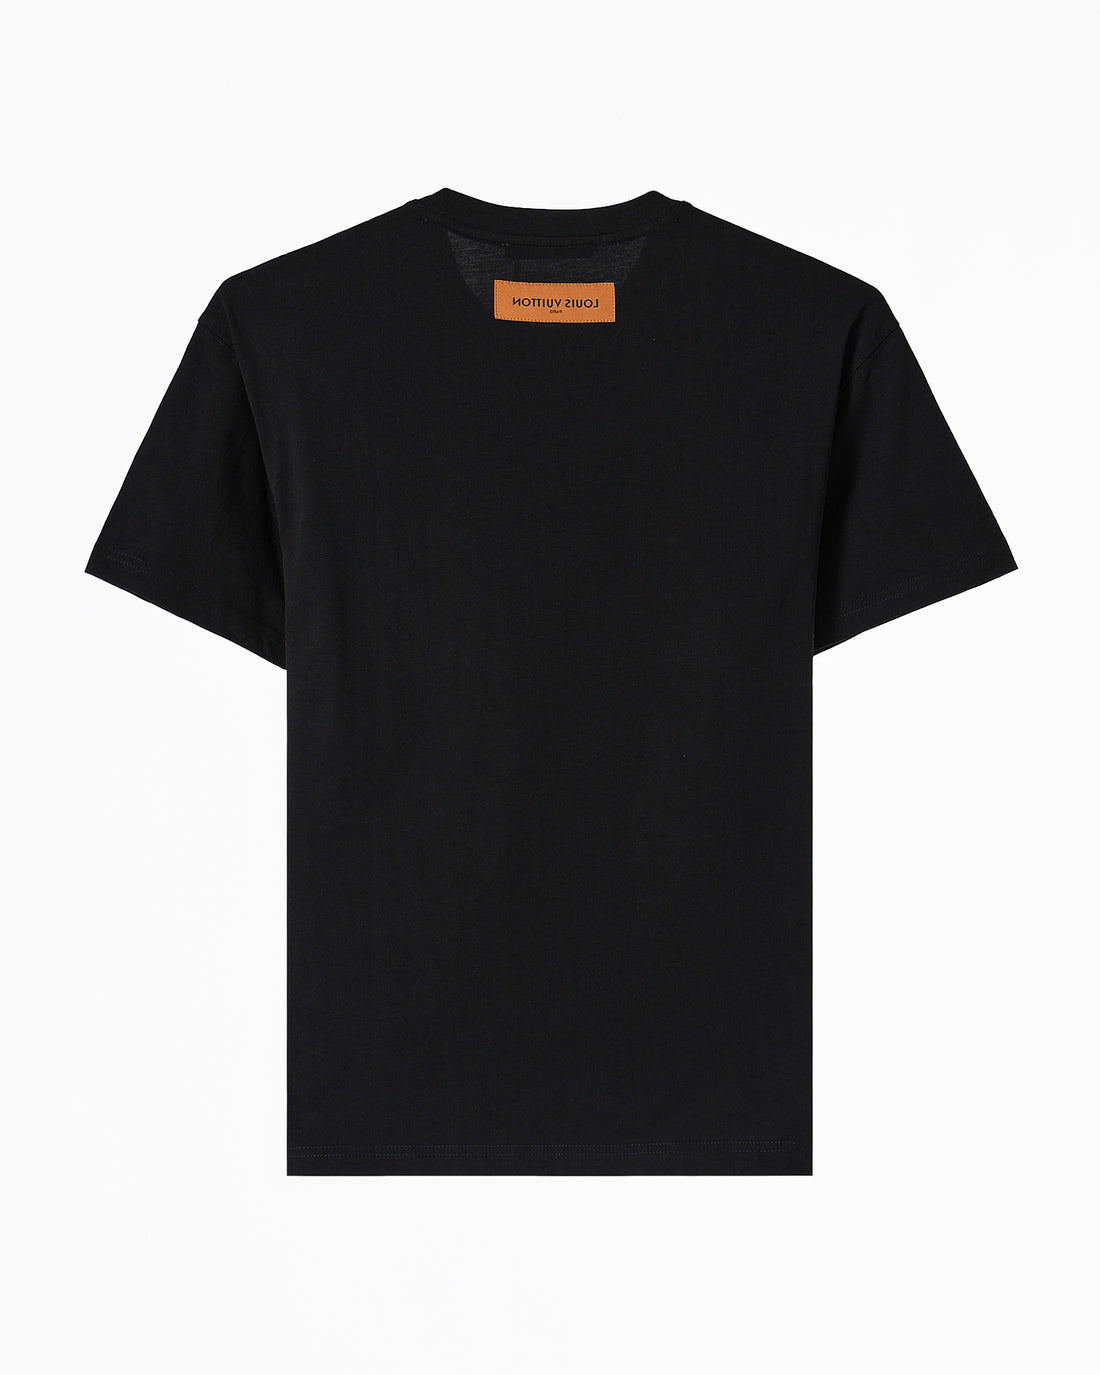 LV Eye Embroidered Men Black T-Shirt 55.90